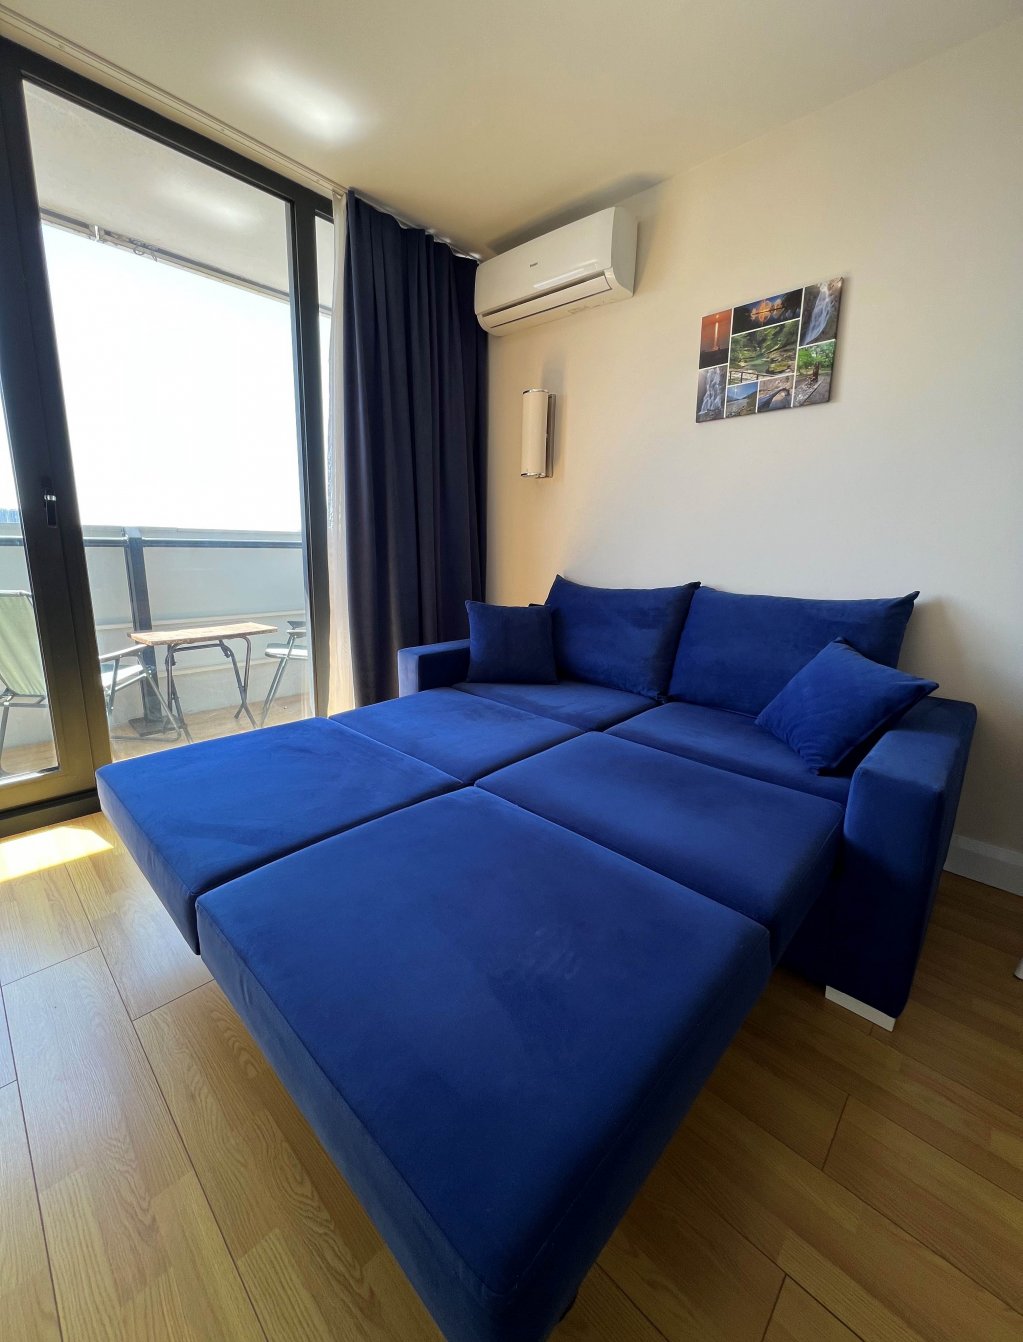 1-bedroom apartment in Orbi City id-1060 -  rent an apartment in Batumi